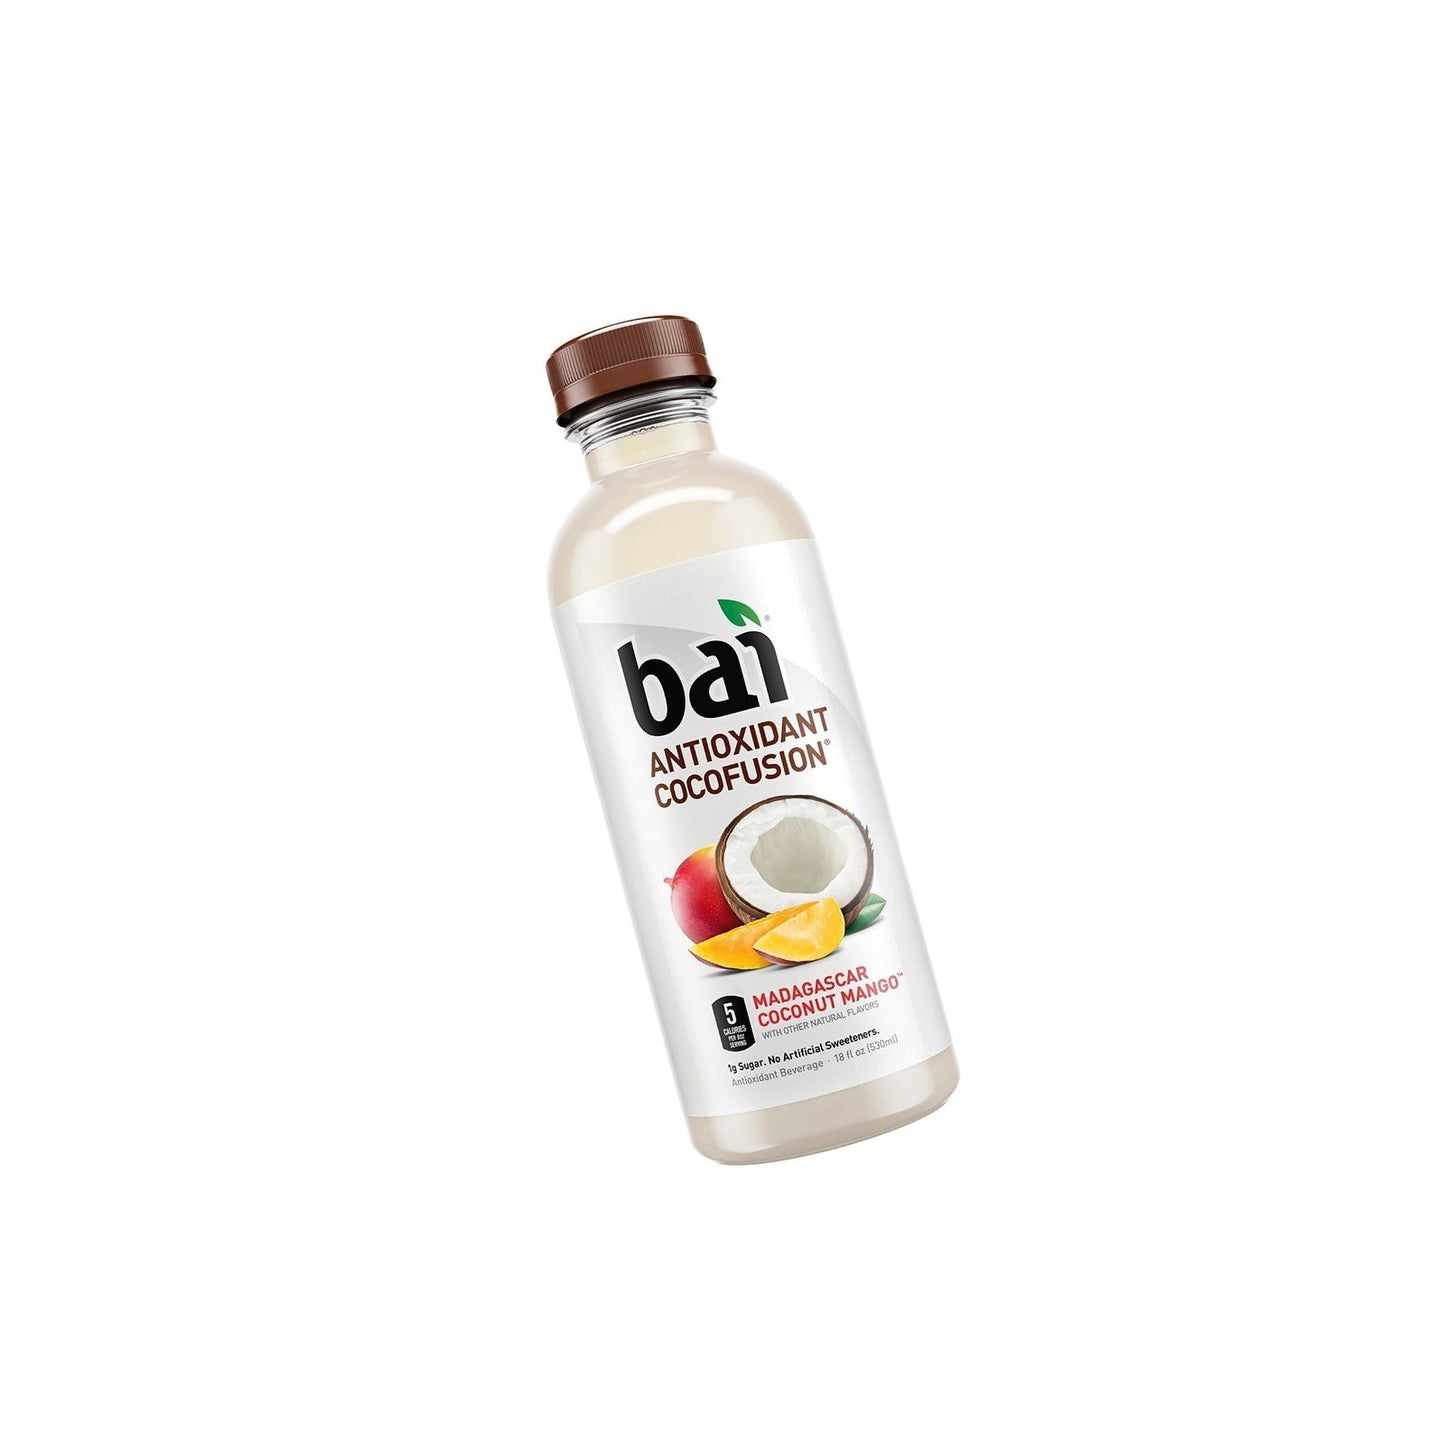 Bai Coco-fusion Antioxidant Infused Beverage, Madagascar Coconut Mango, 18 Fl Oz